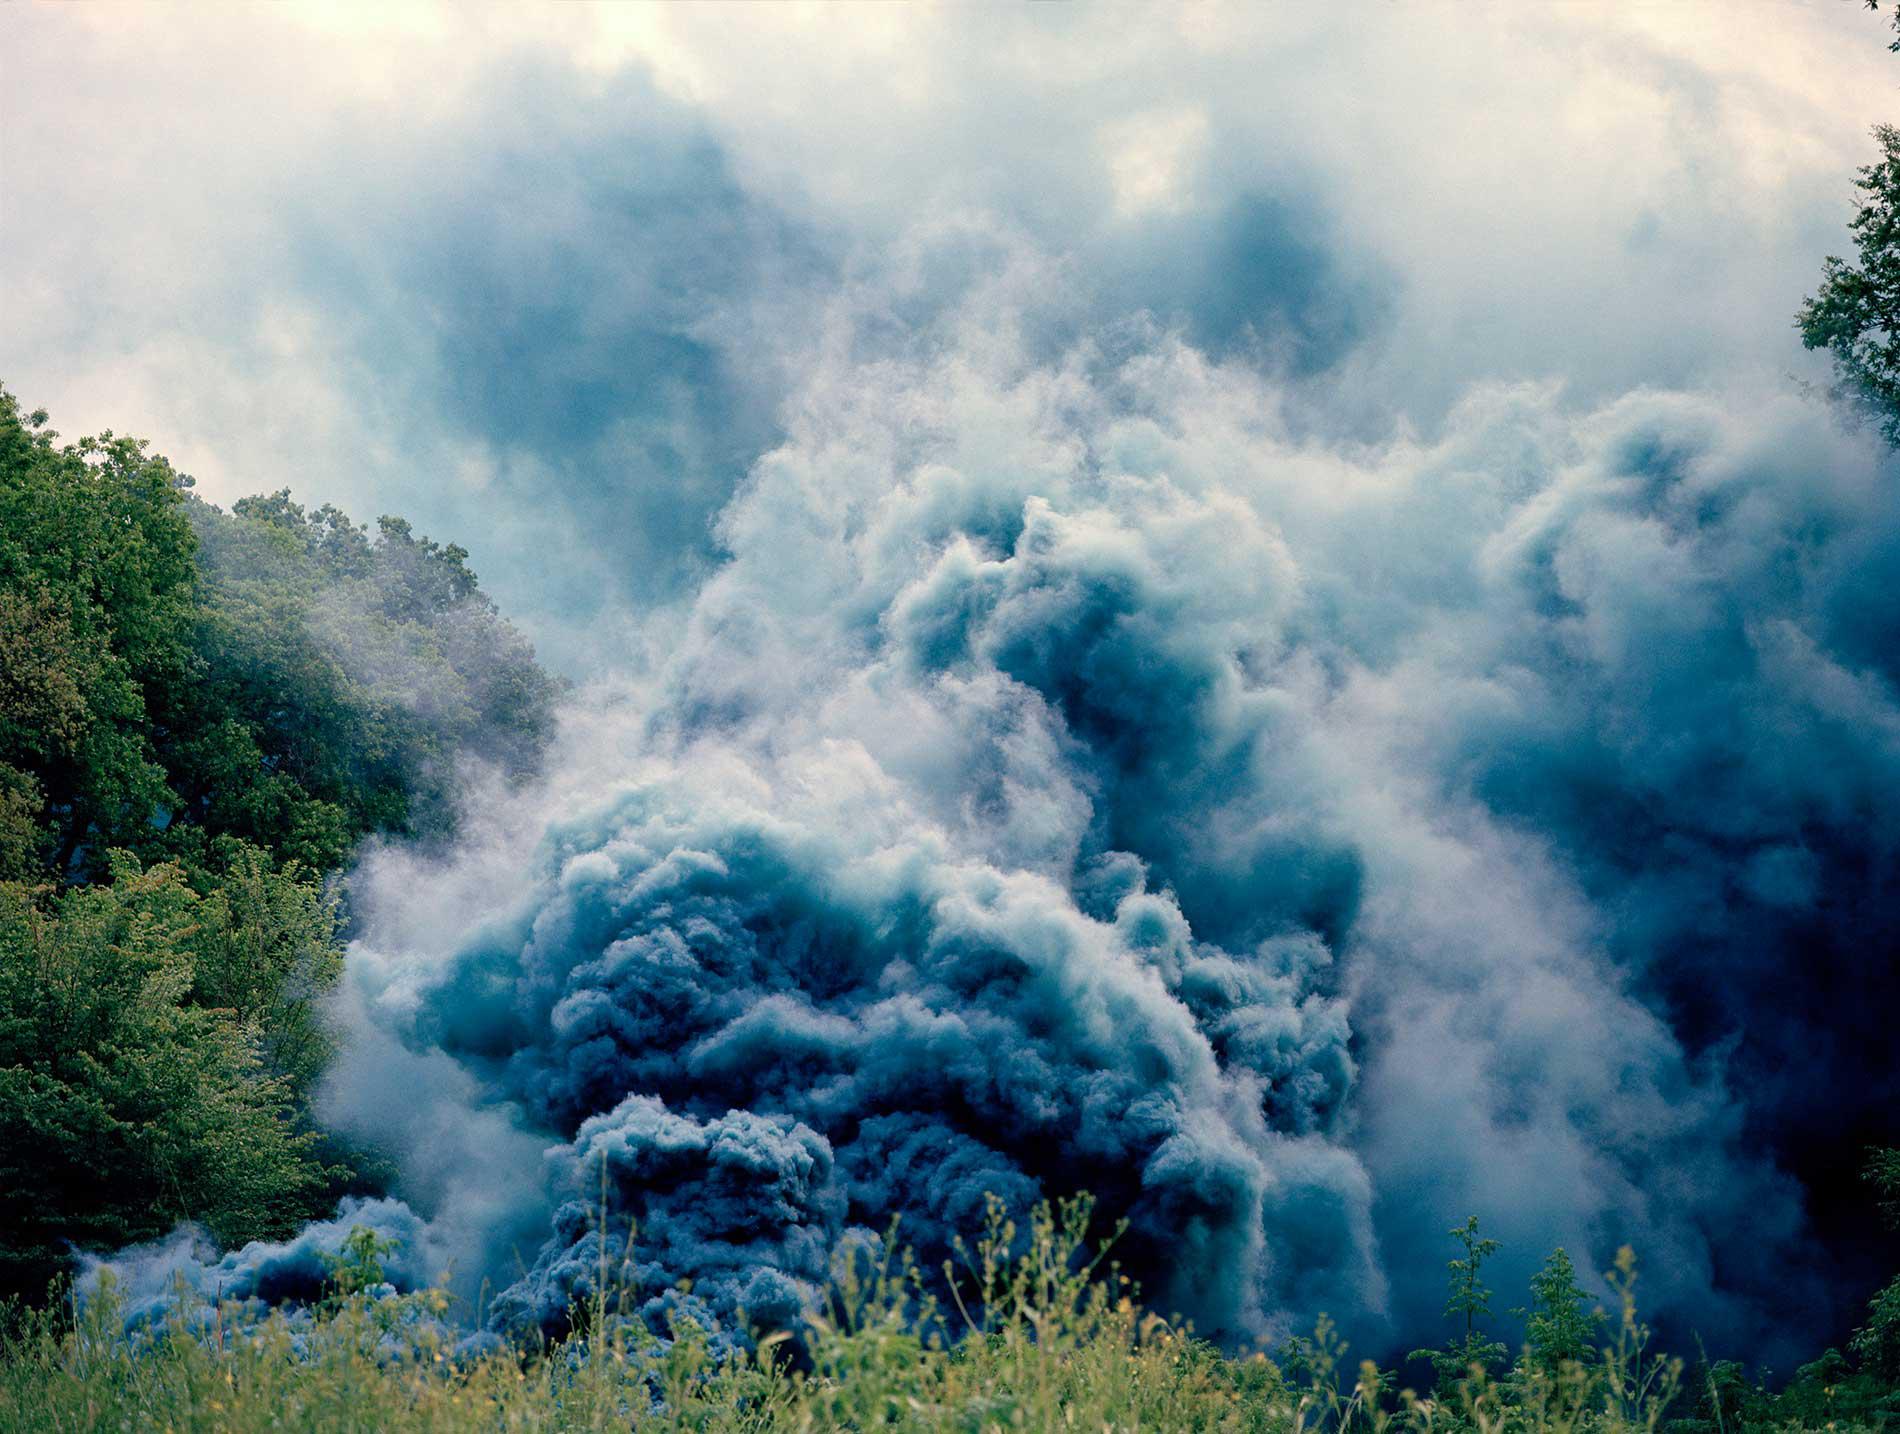 A big cloud of blue smoke filling a green field of grass